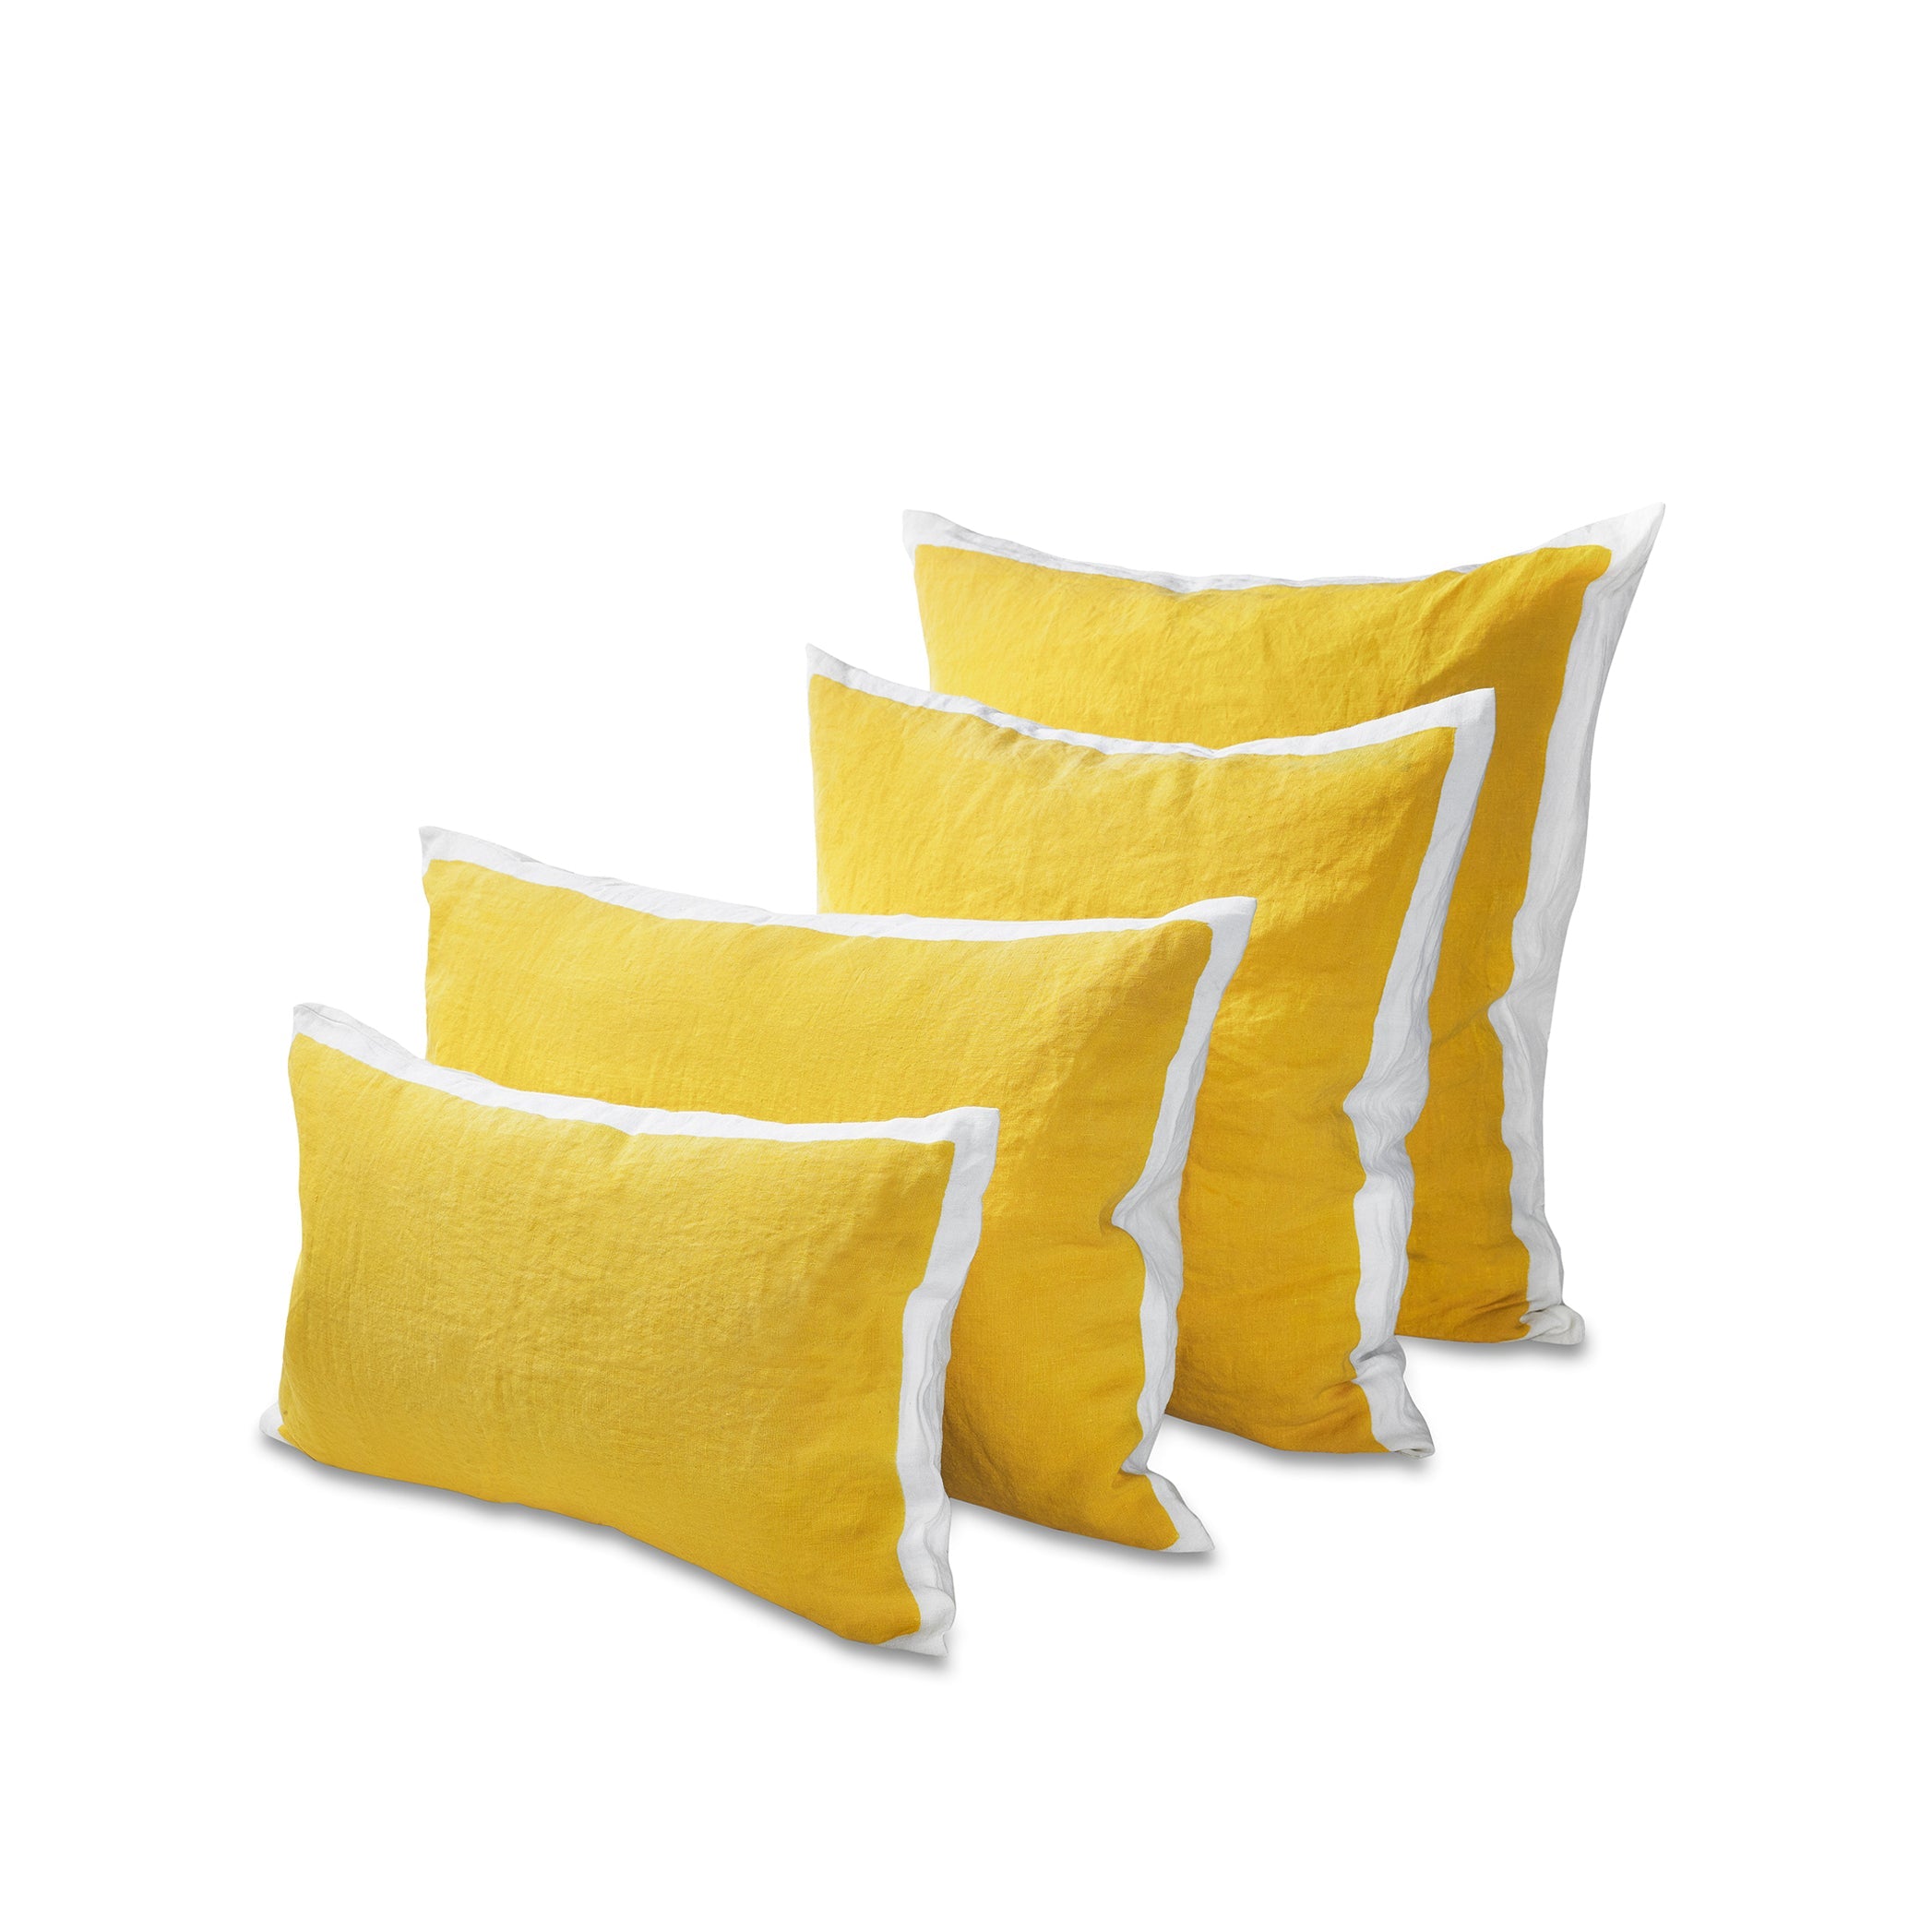 Hand Painted Linen Cushion in Lemon Yellow, 50cm x 50cm